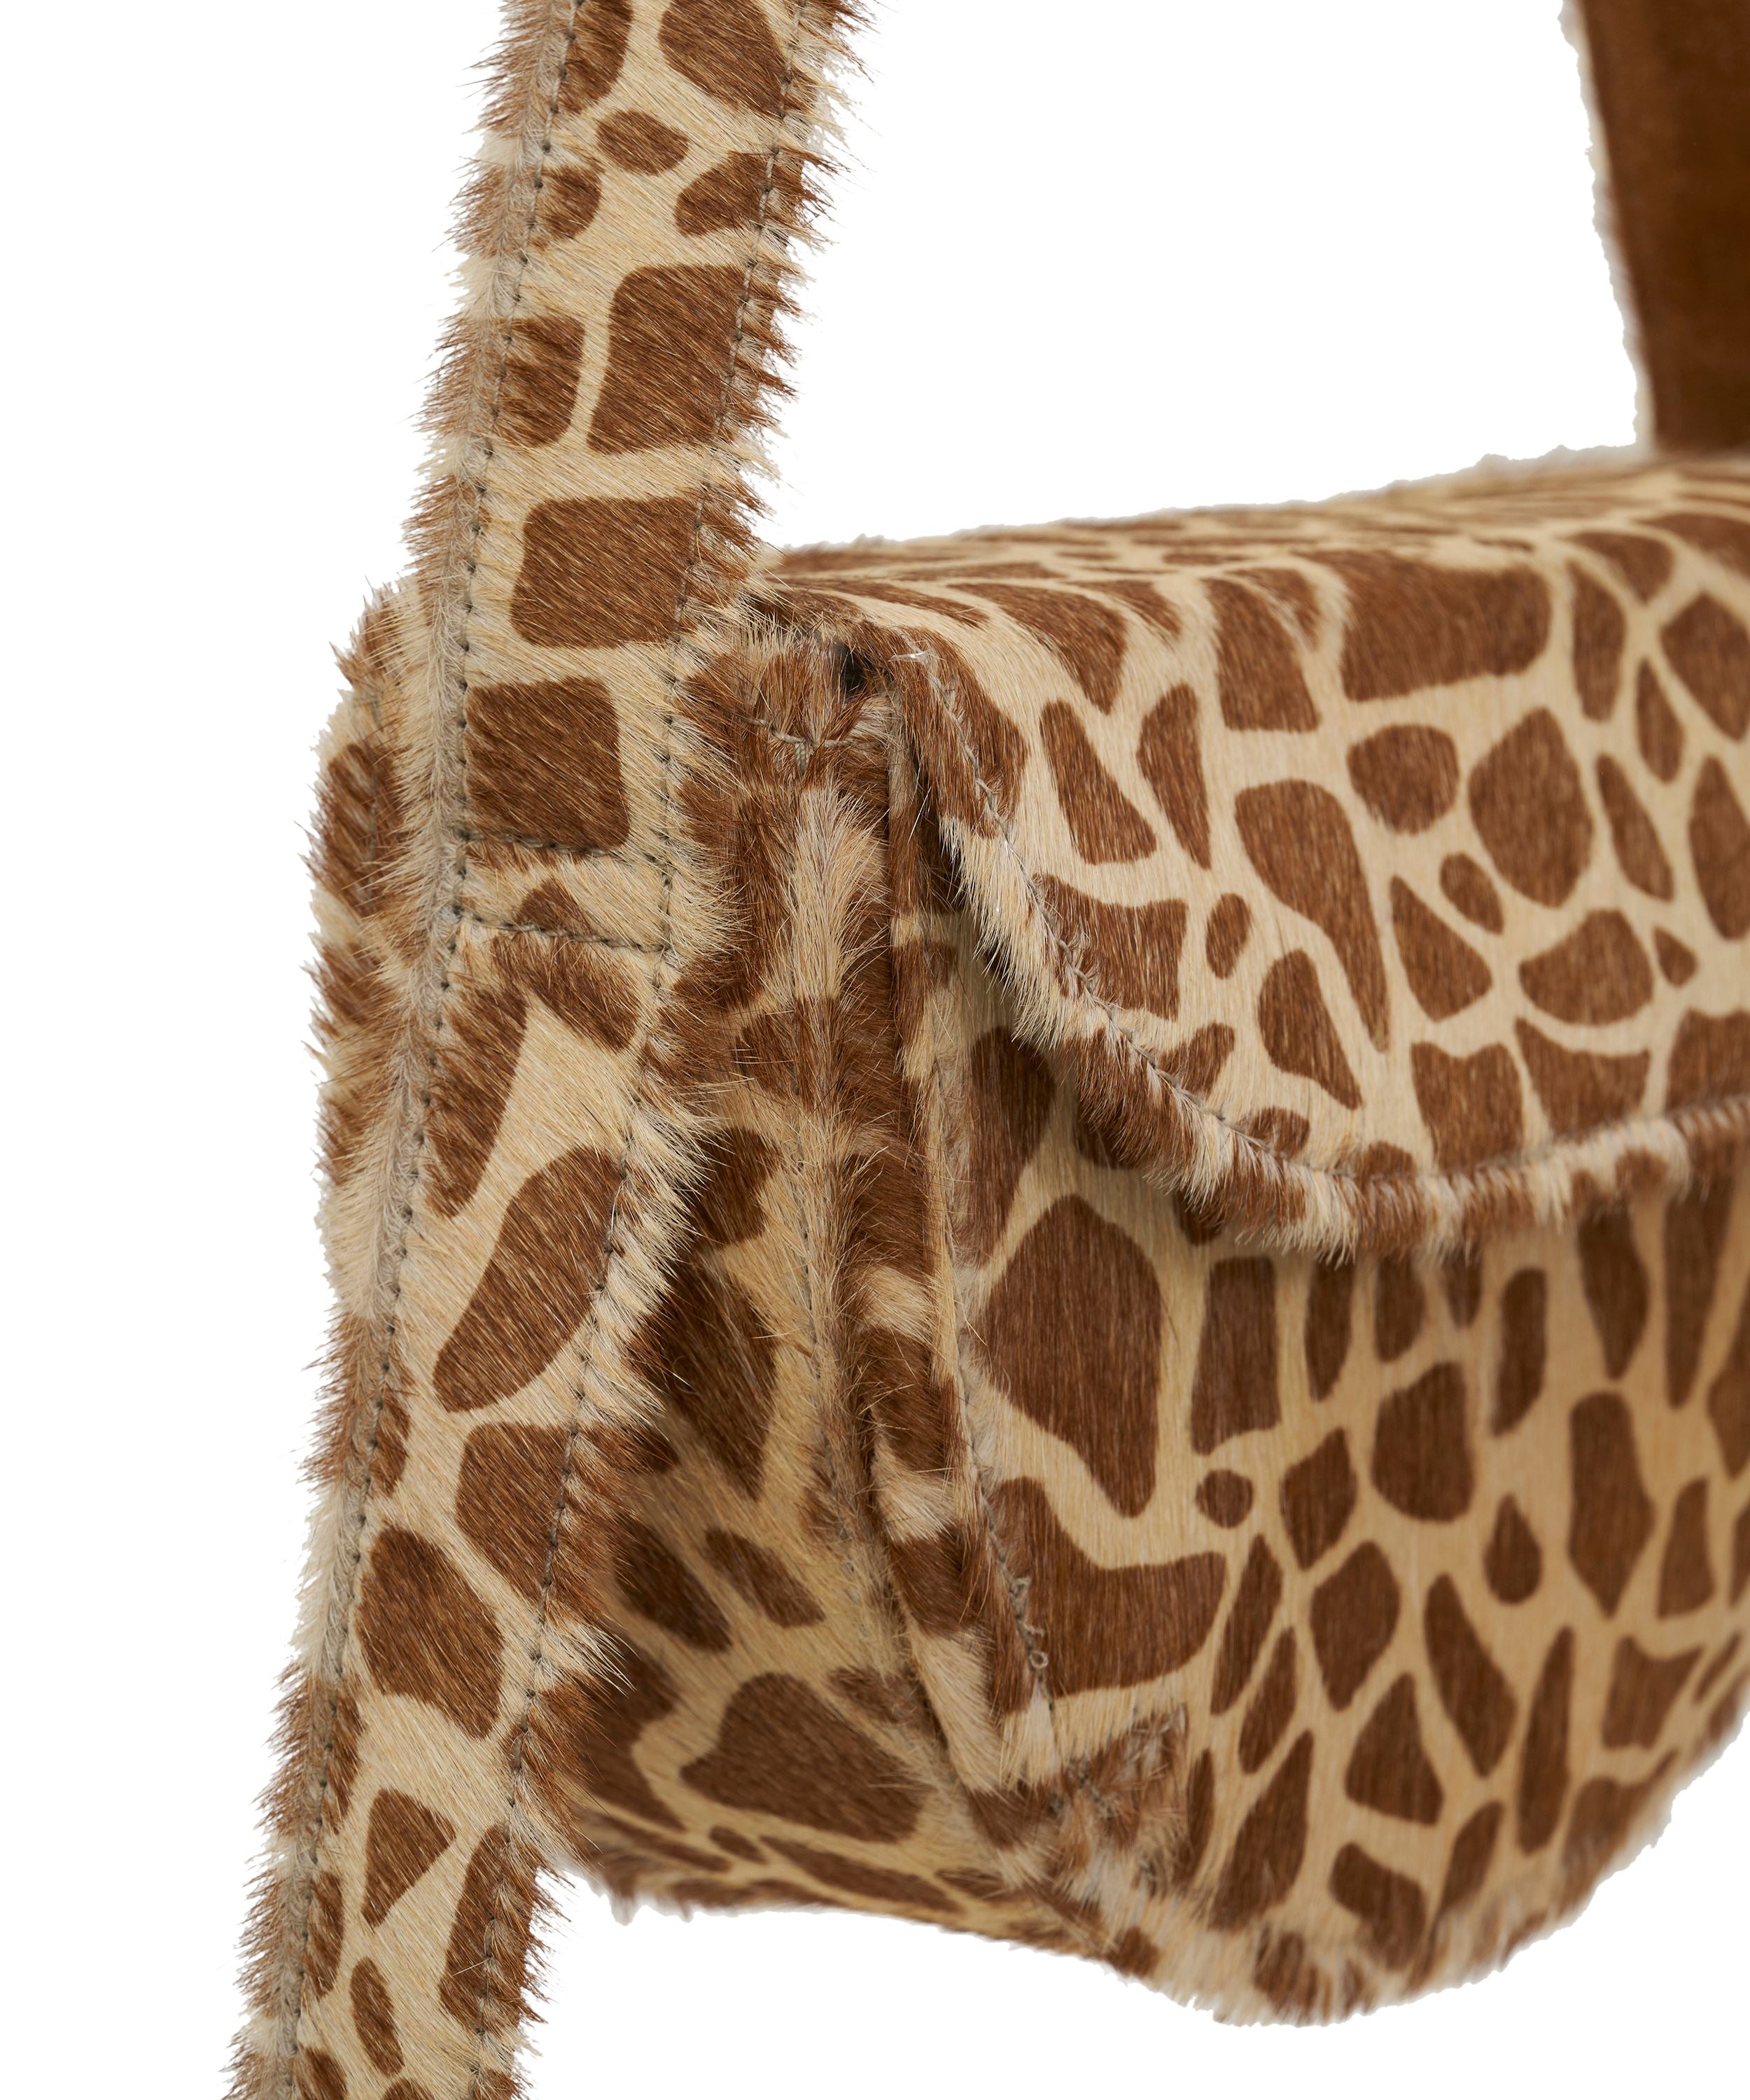 Billie Bag in Giraffe